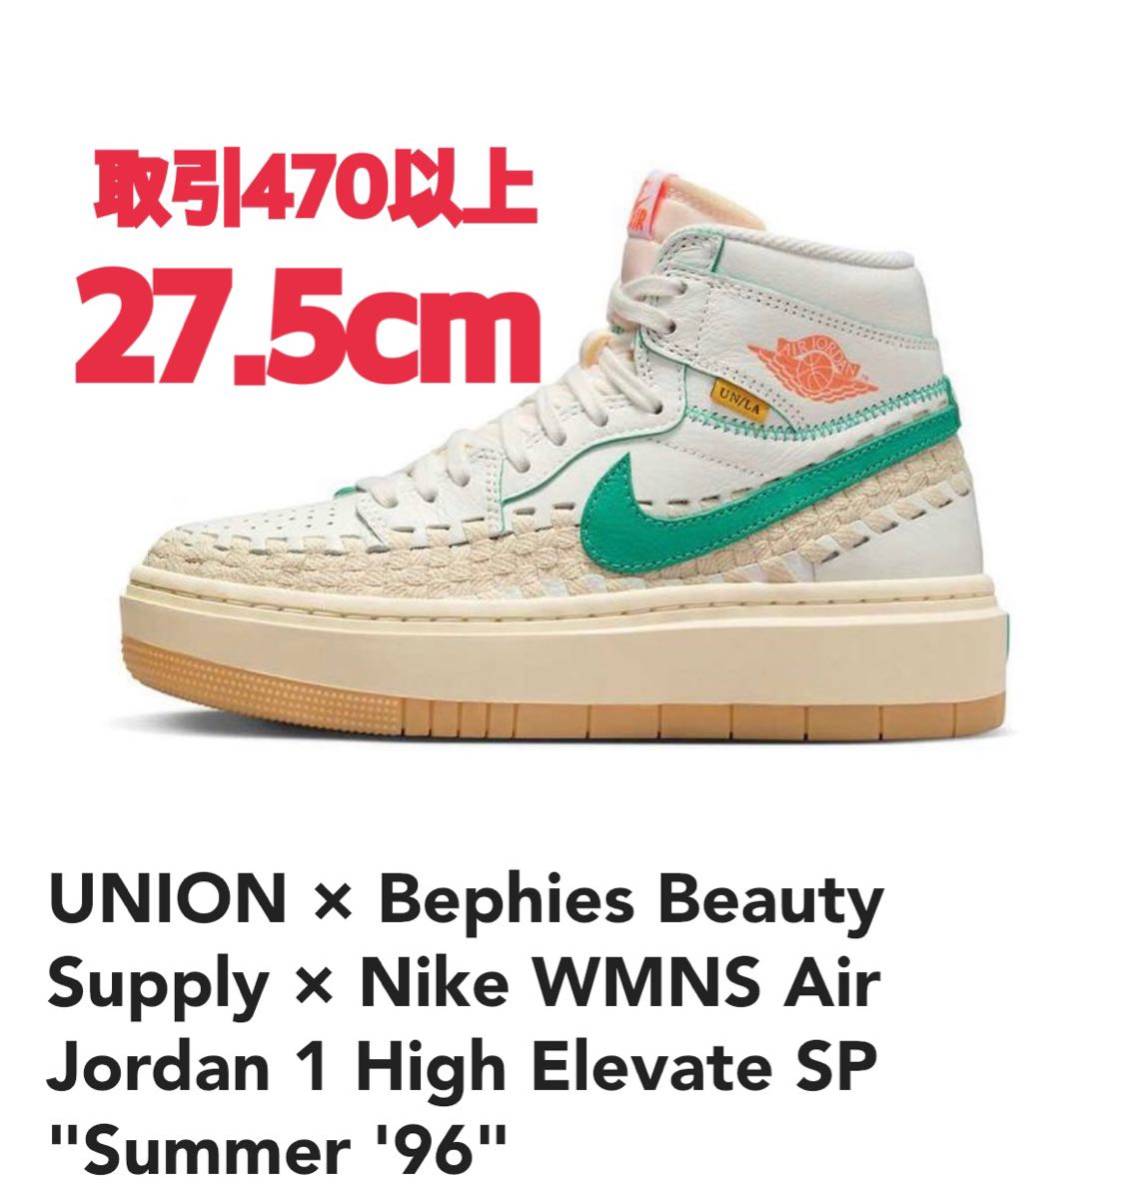 UNION Bephies Beauty Supply Nike WMNS Air Jordan 1 High Elevate Summer '96 27.5cm ユニオン ナイキ エアジョーダン1 ハイ エレベート